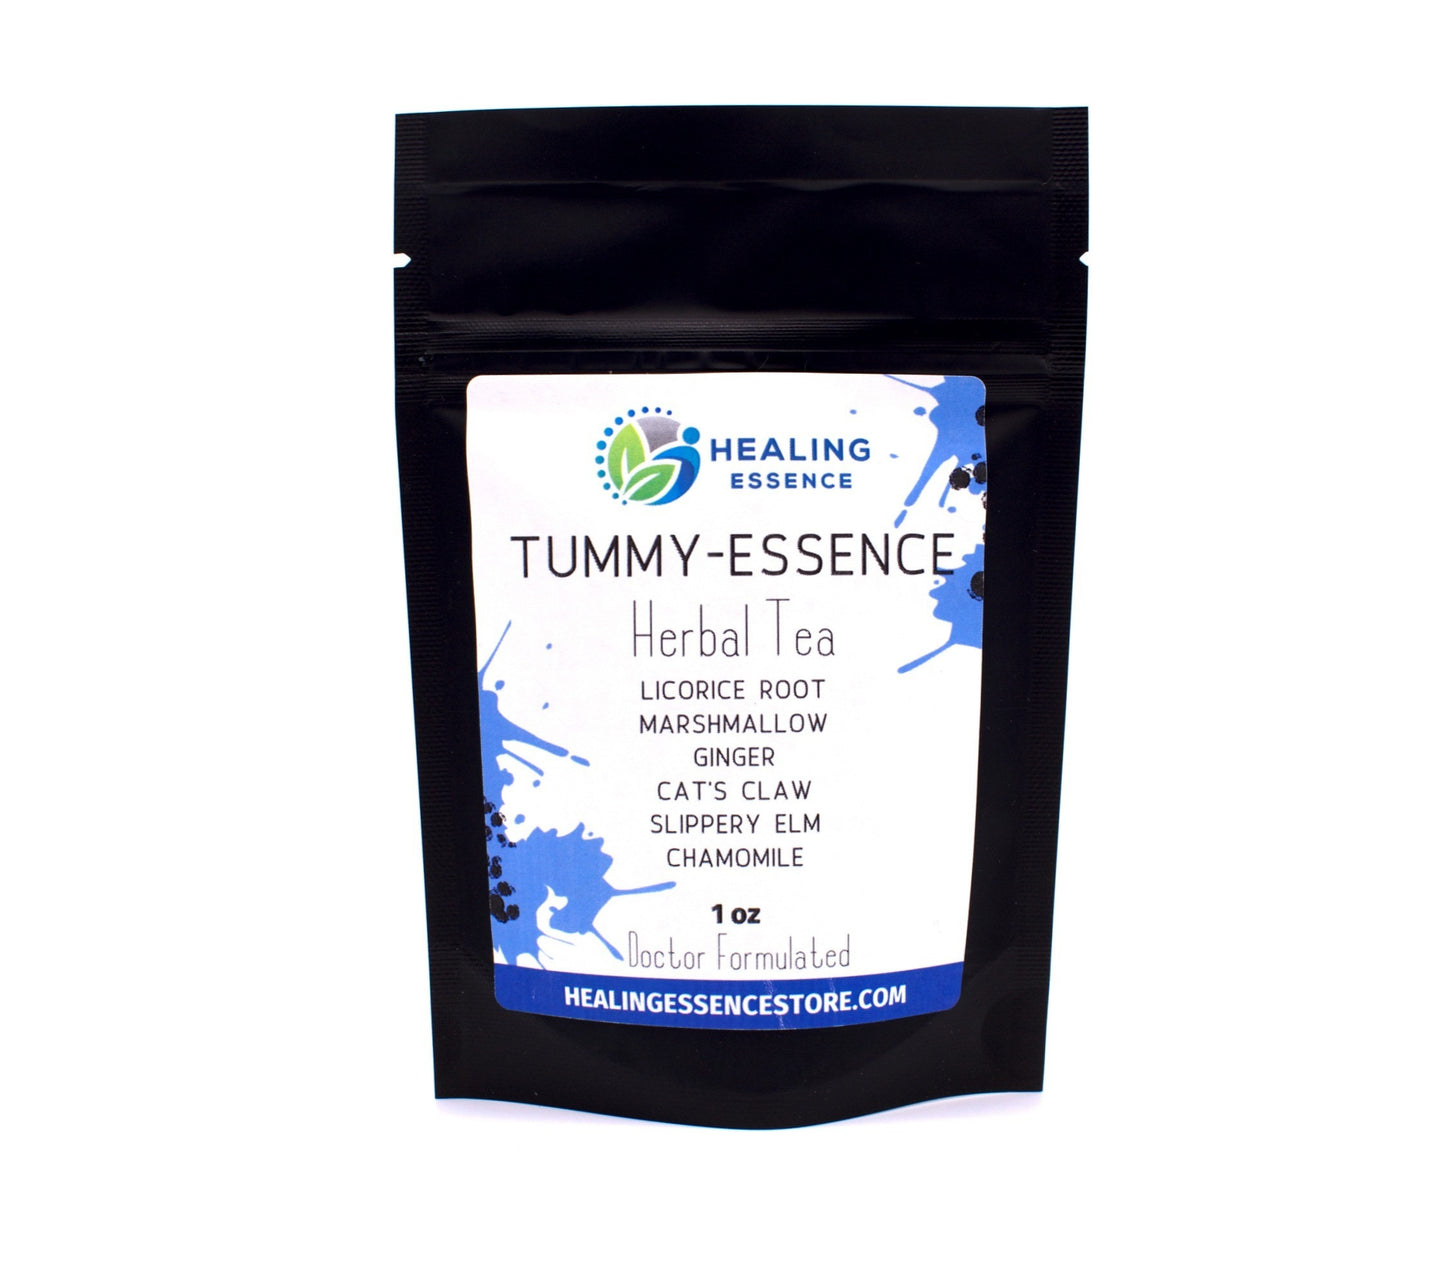 Tummy-Essence